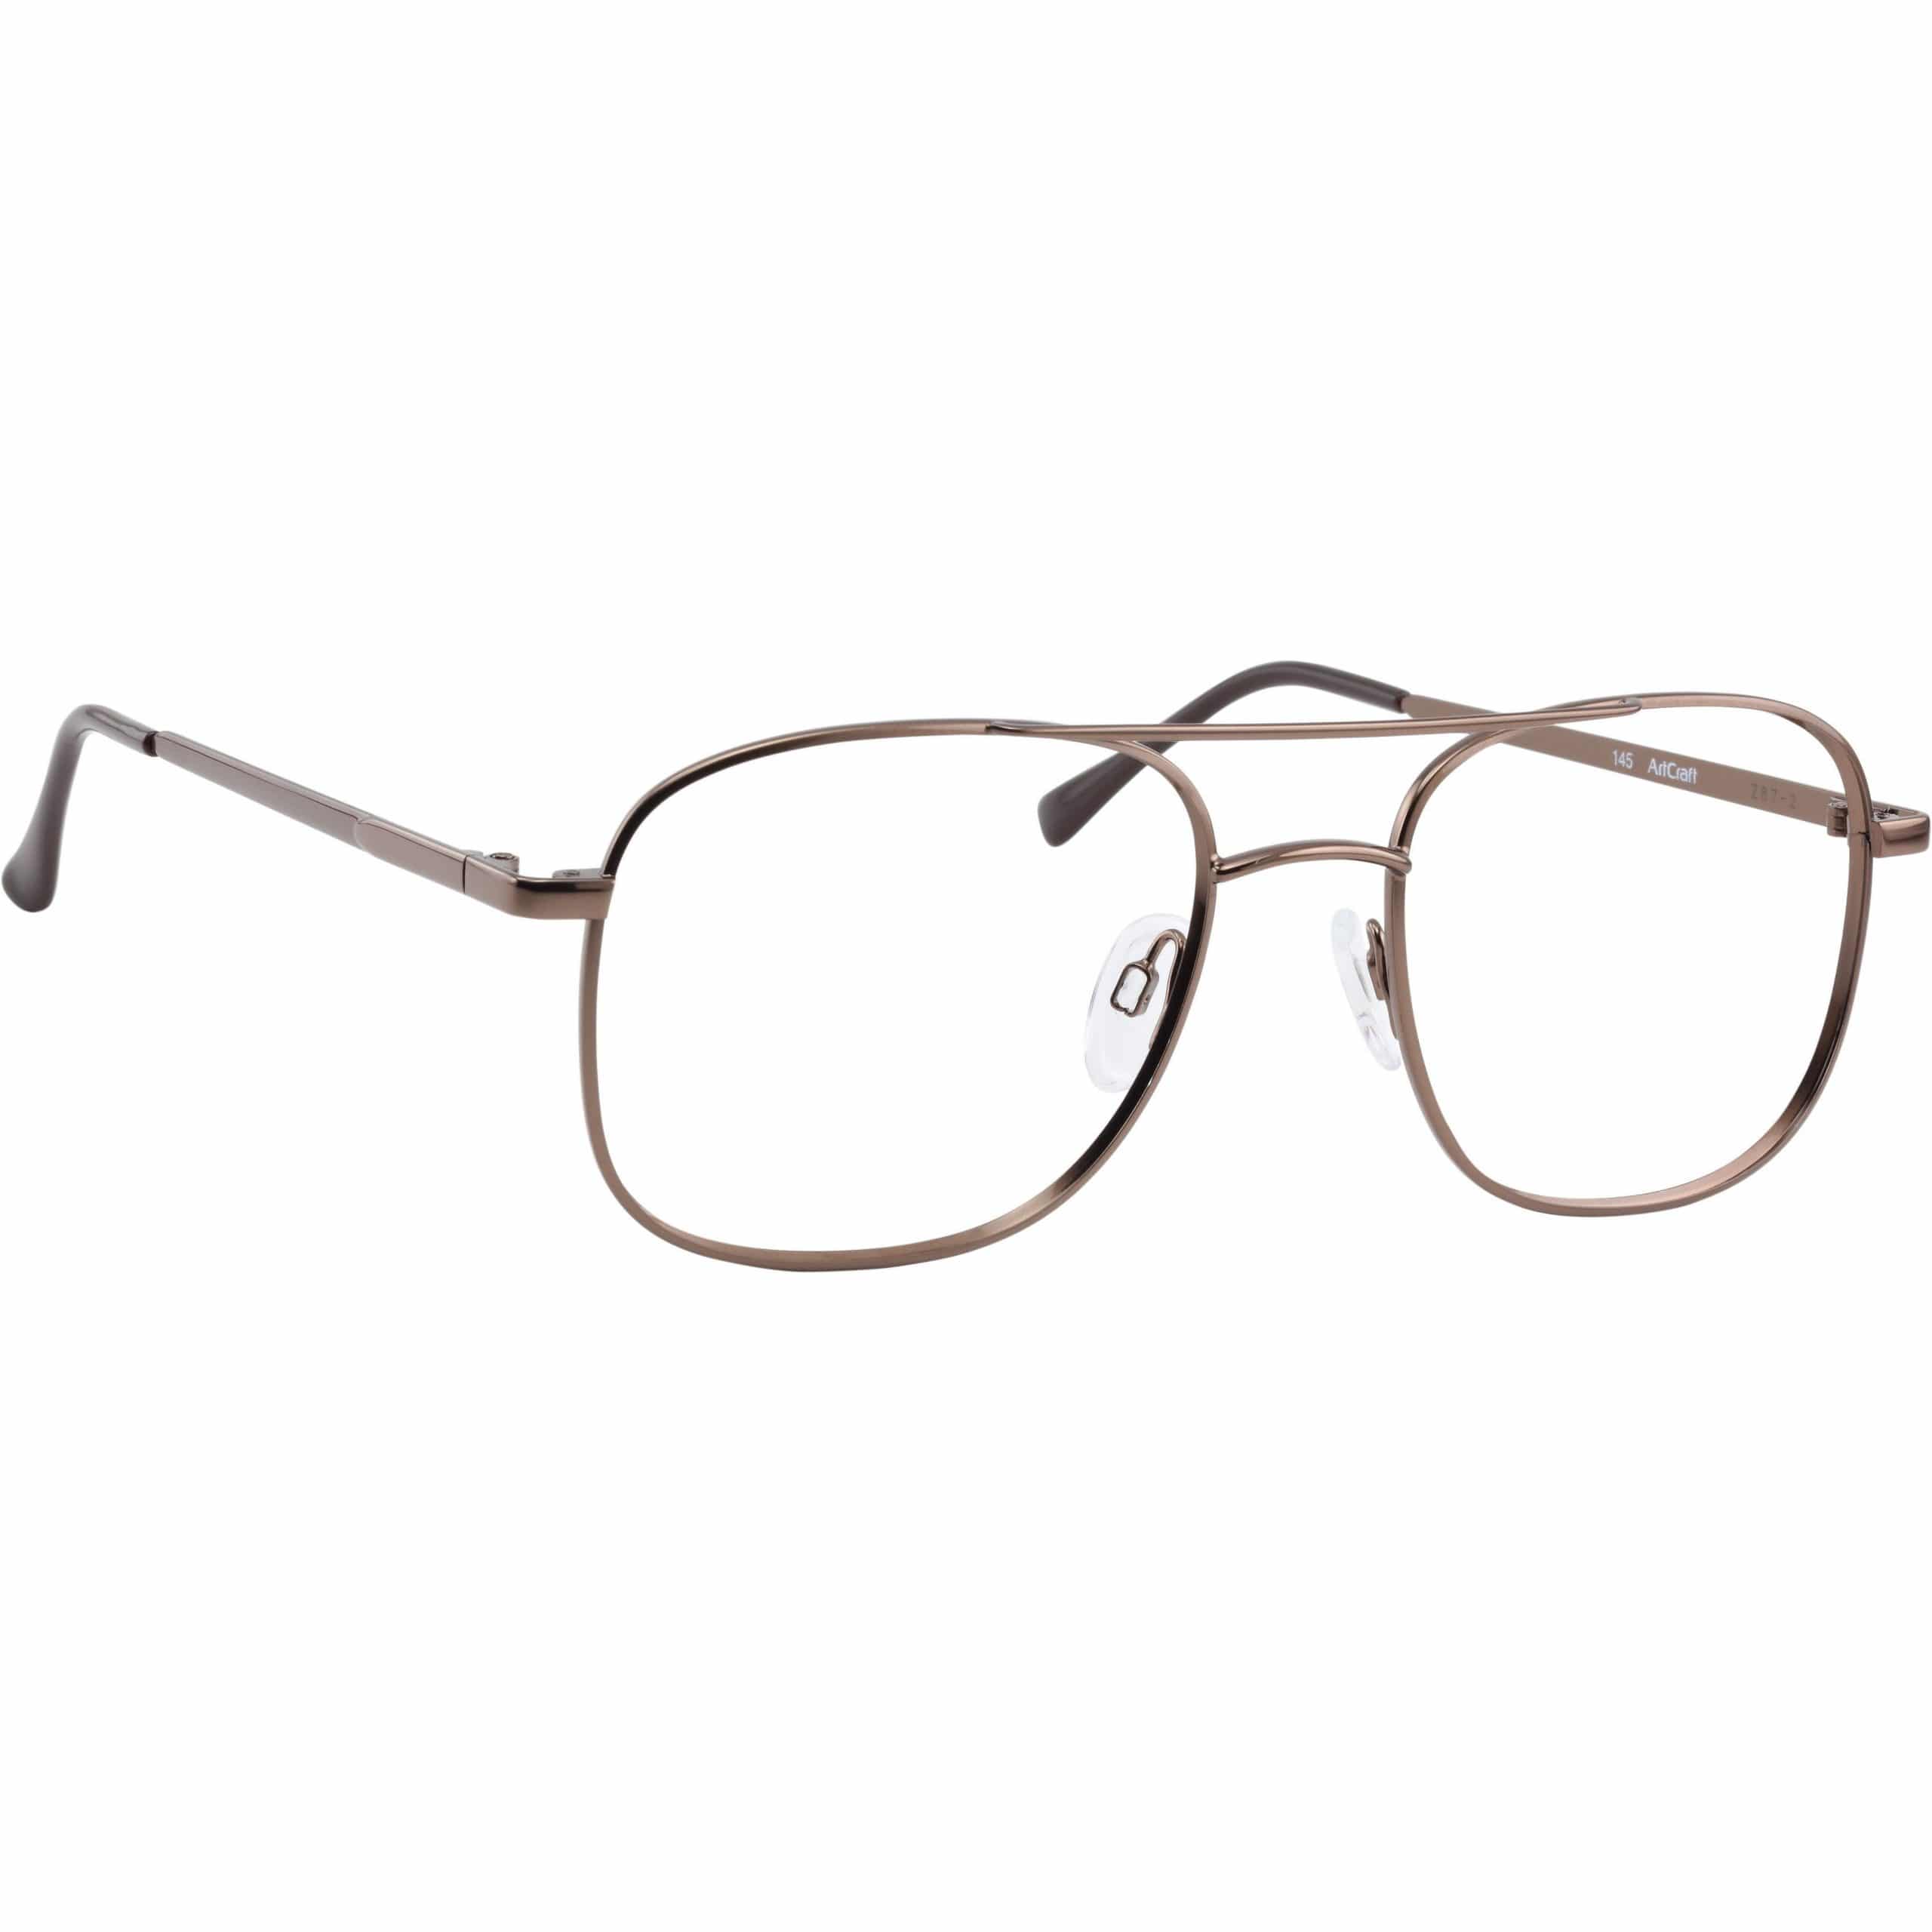 Art-Craft USA Workforce 673A Eyeglasses - Safety Protection Glasses